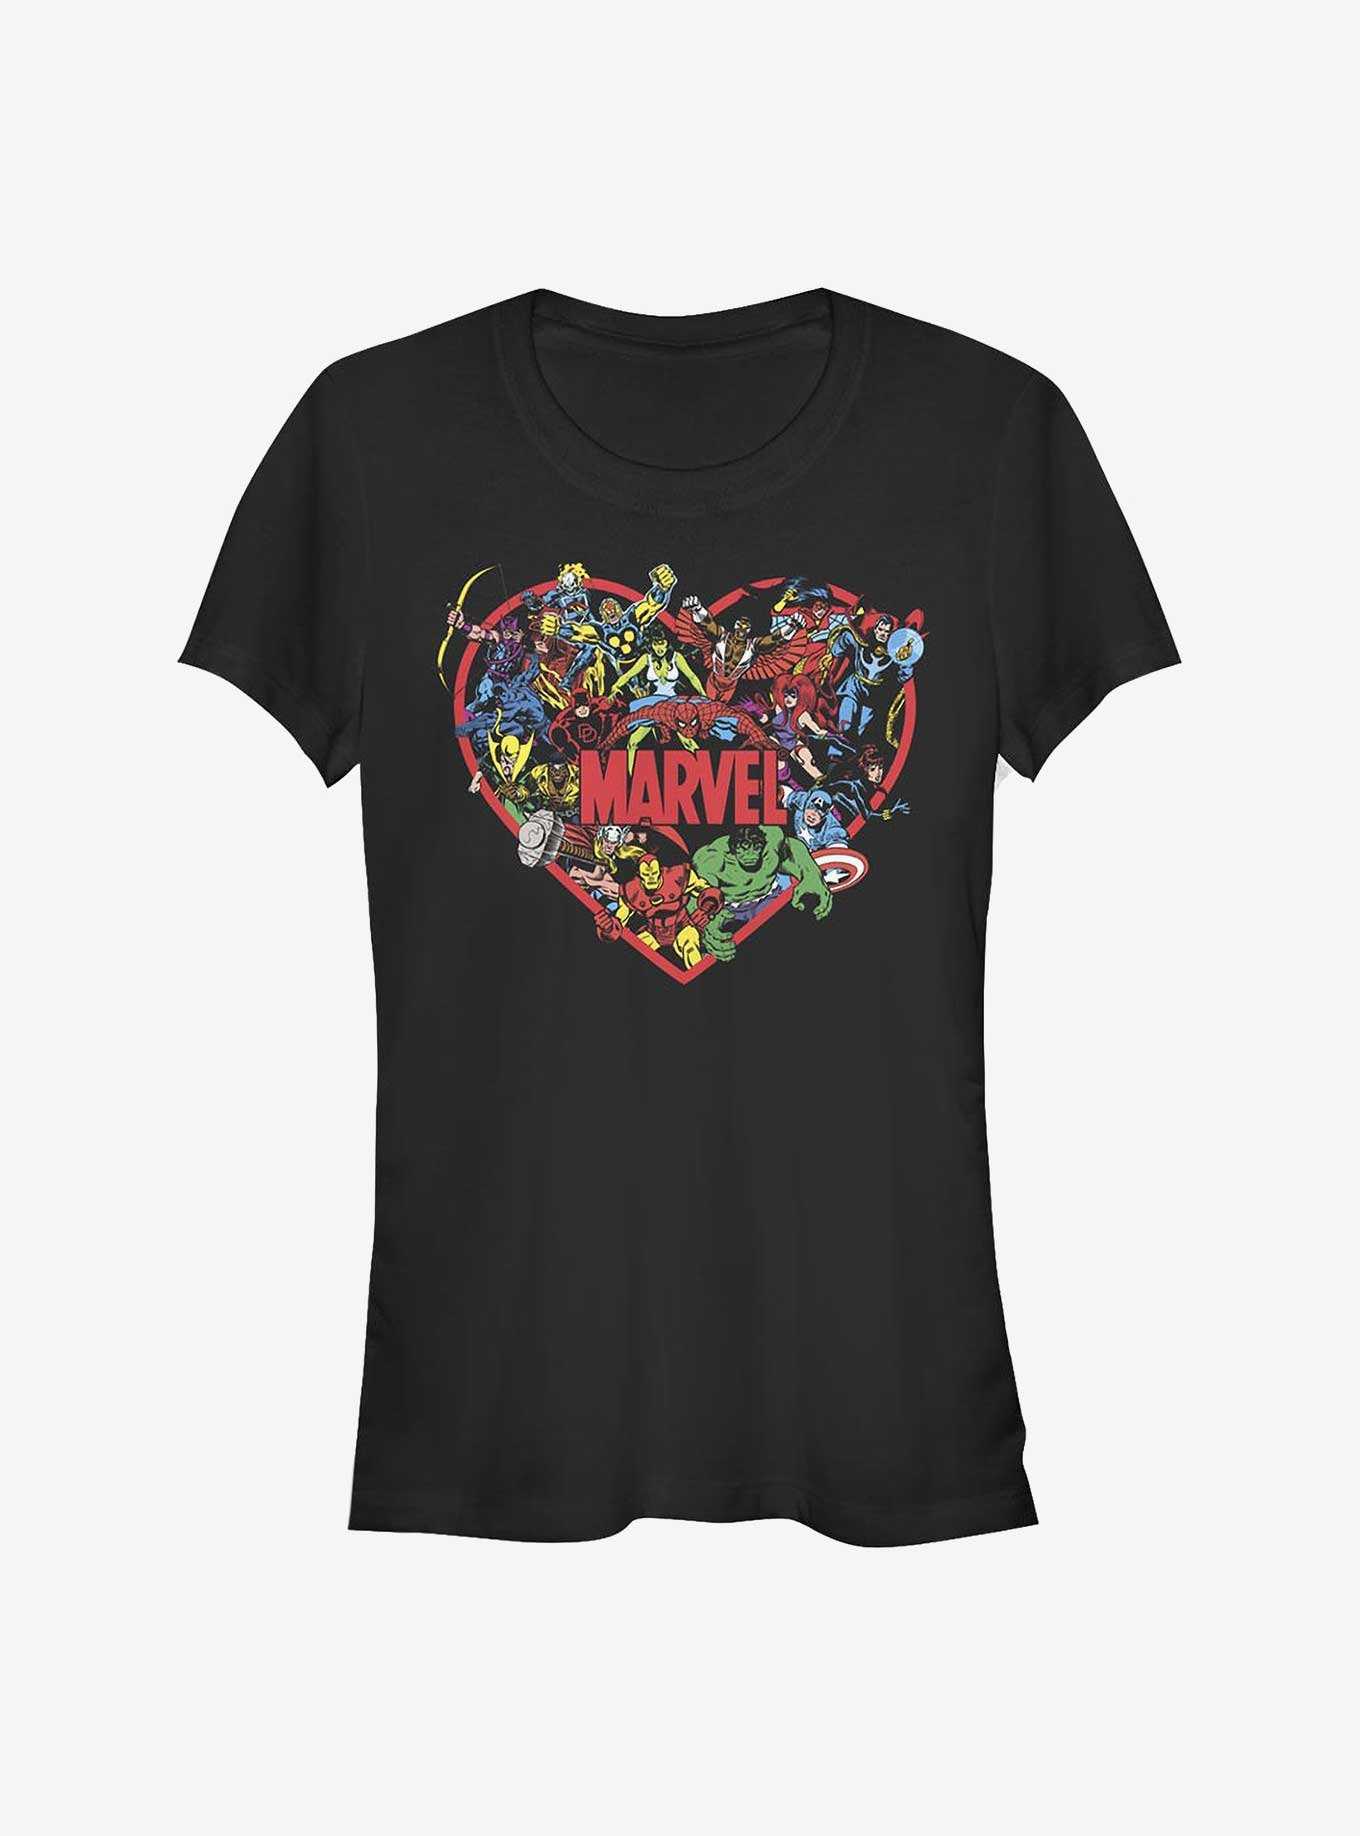 OFFICIAL Marvel Comics T-Shirts & Marvel Tees | Hot Topic